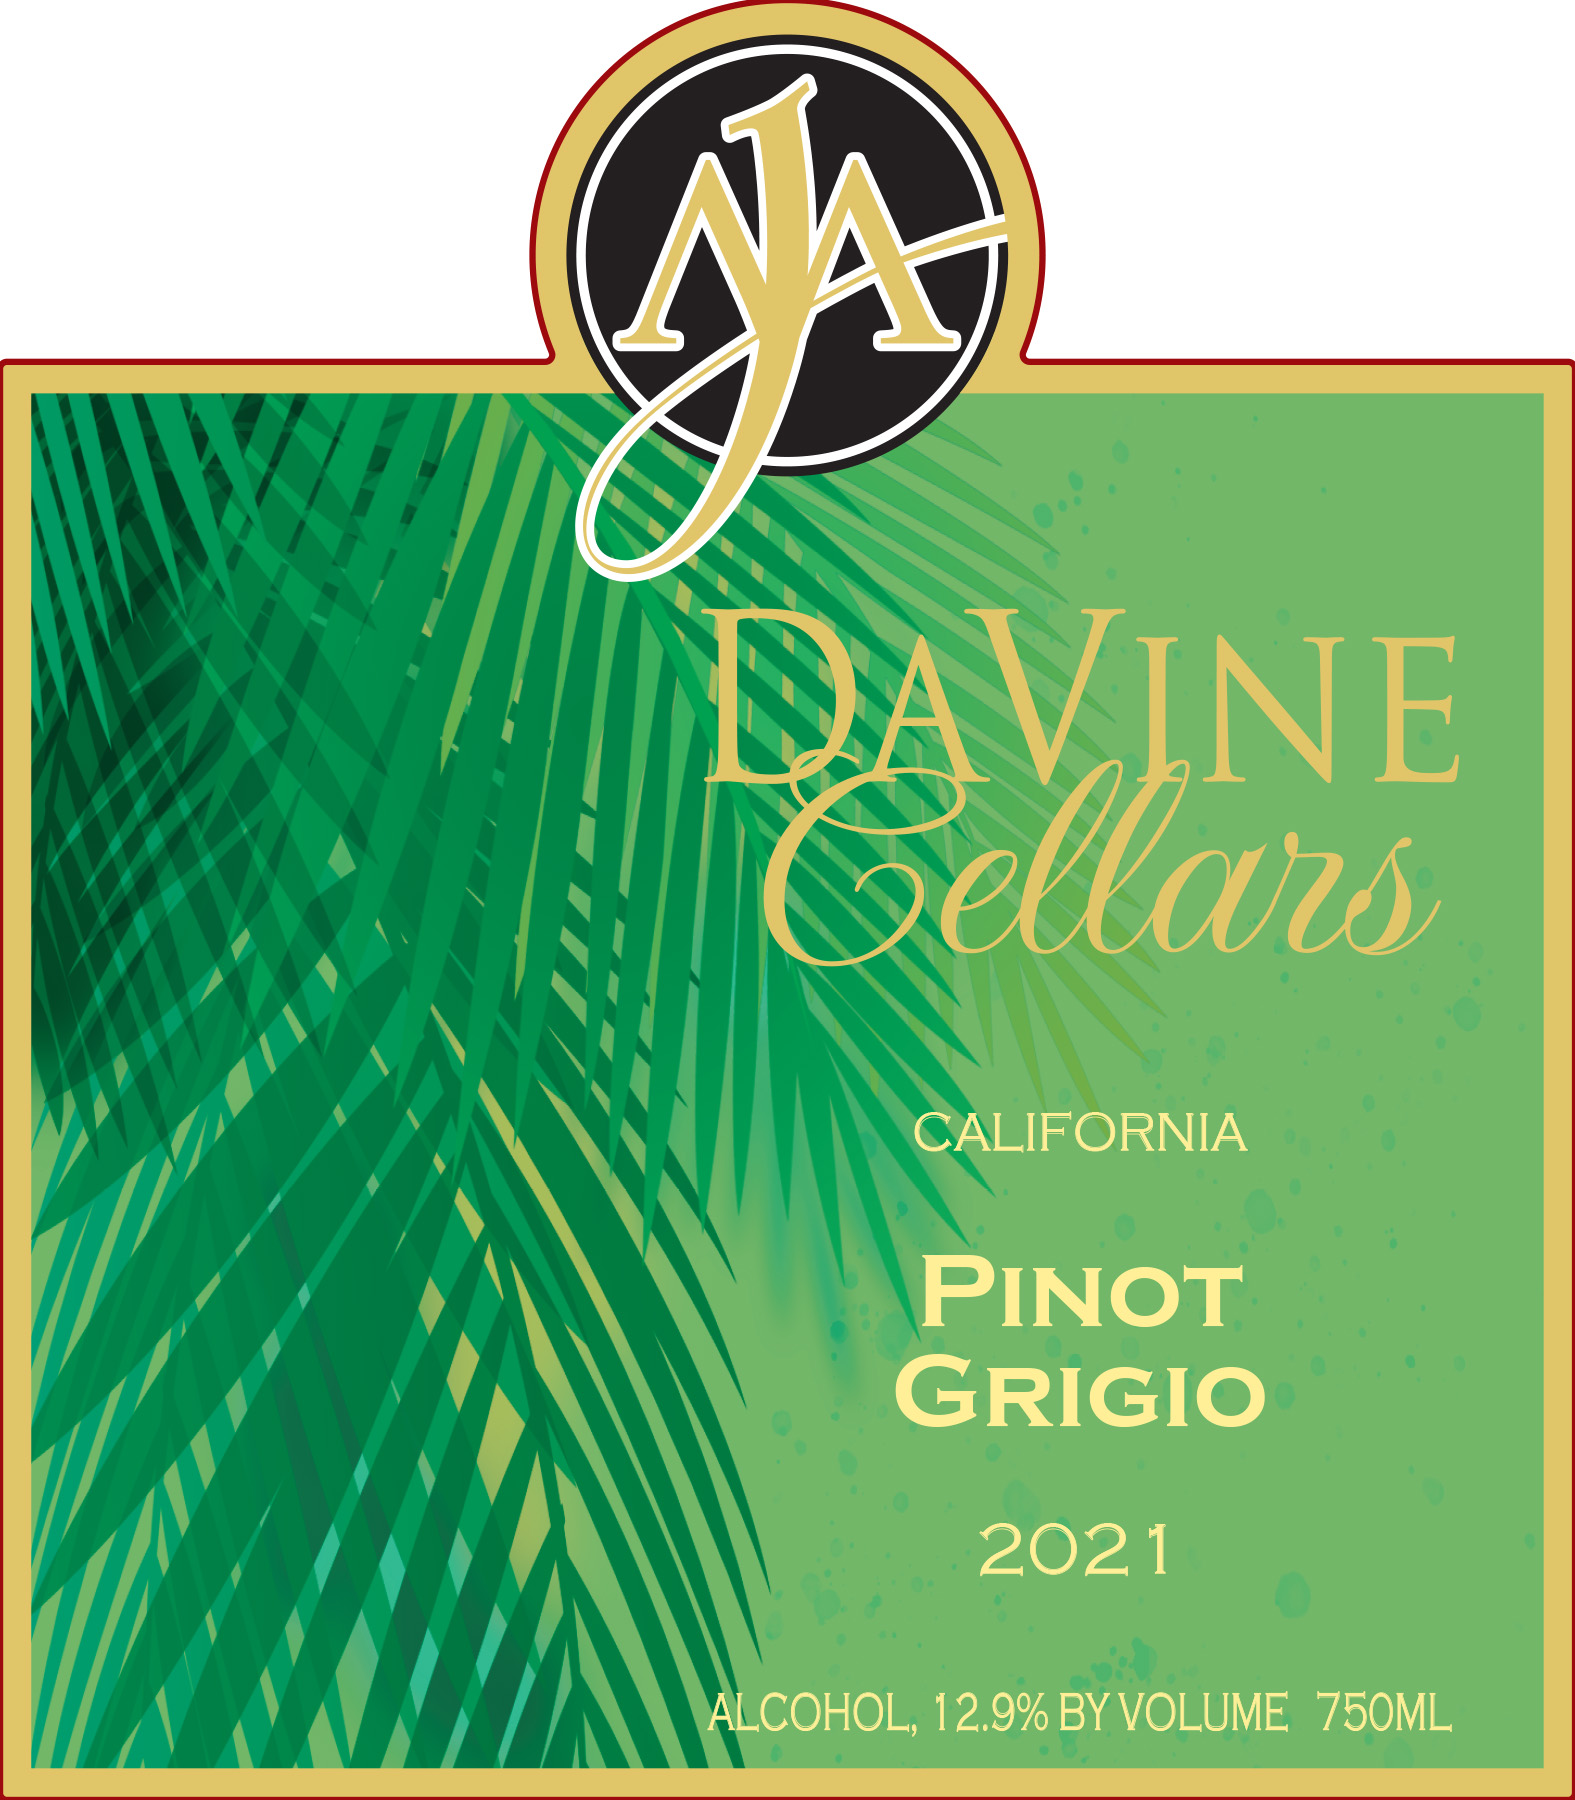 Product Image for 2021 Santa Ynez Pinot Grigio "Tingle"